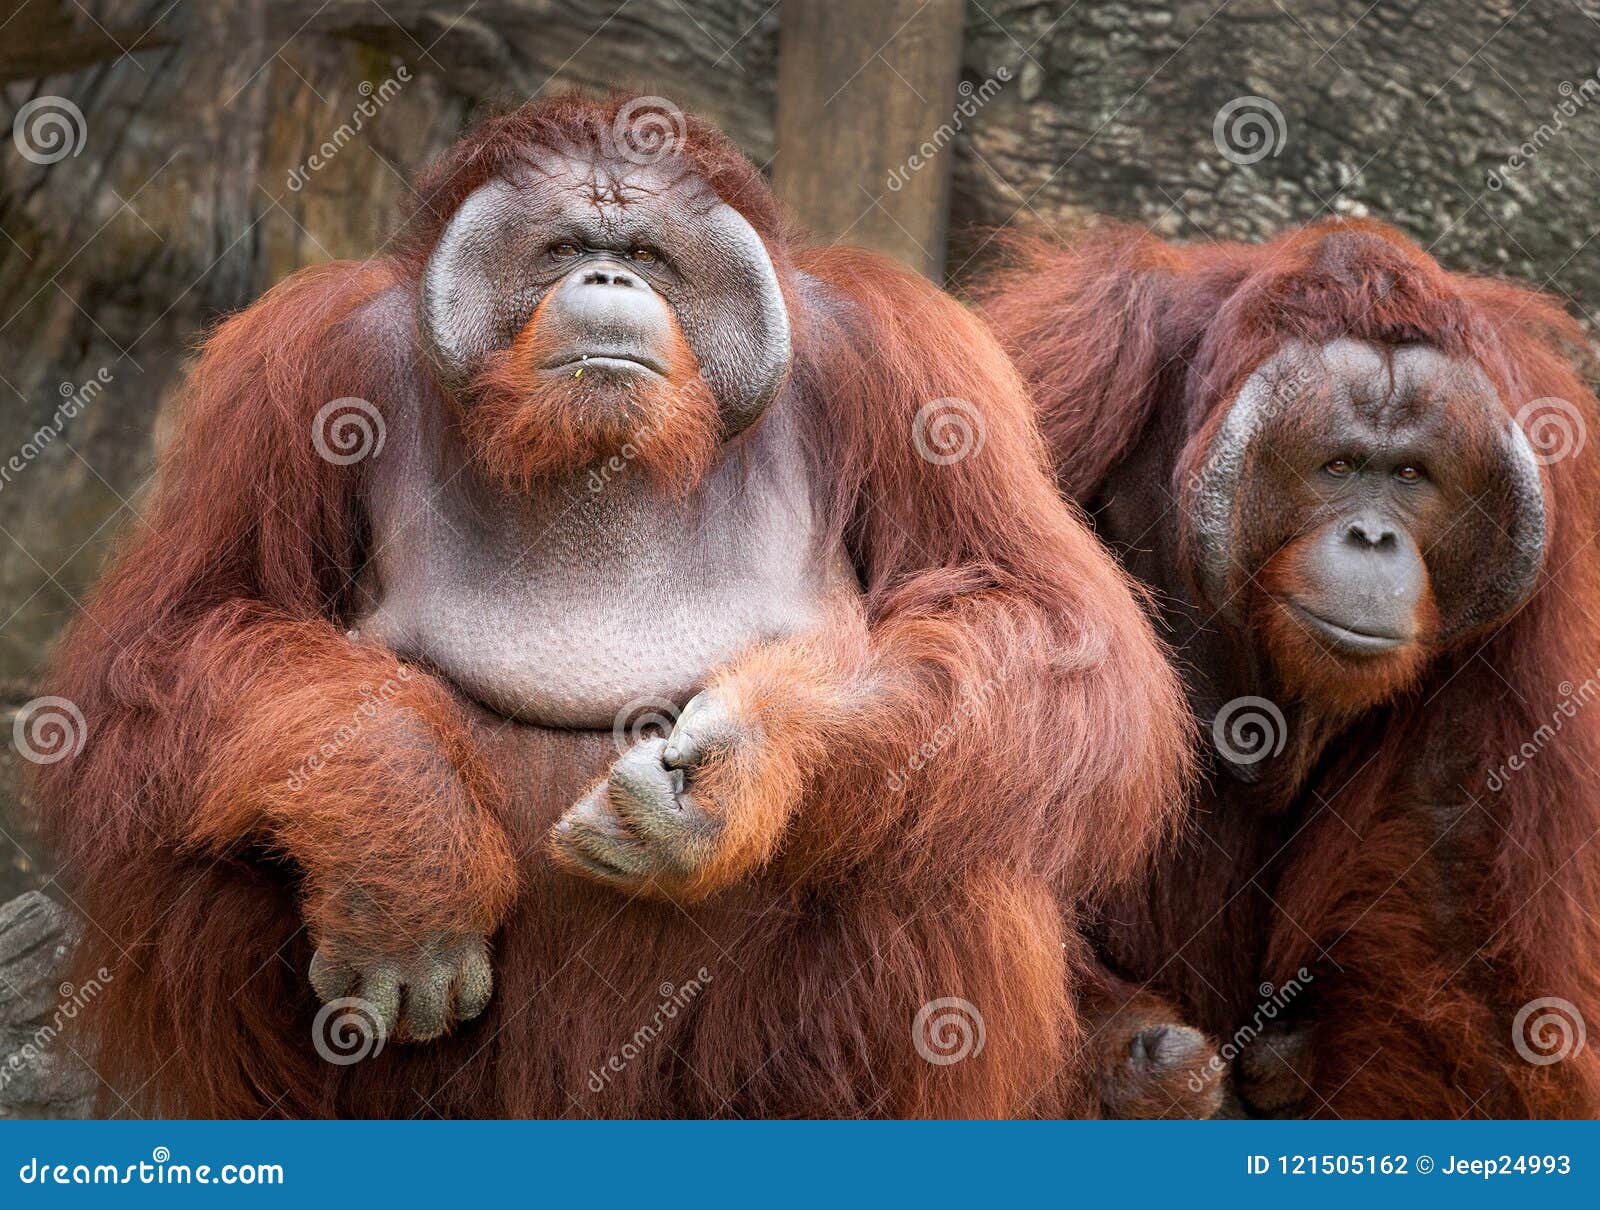 Two orangutan cute. stock photo. Image of orange, jungle - 121505162